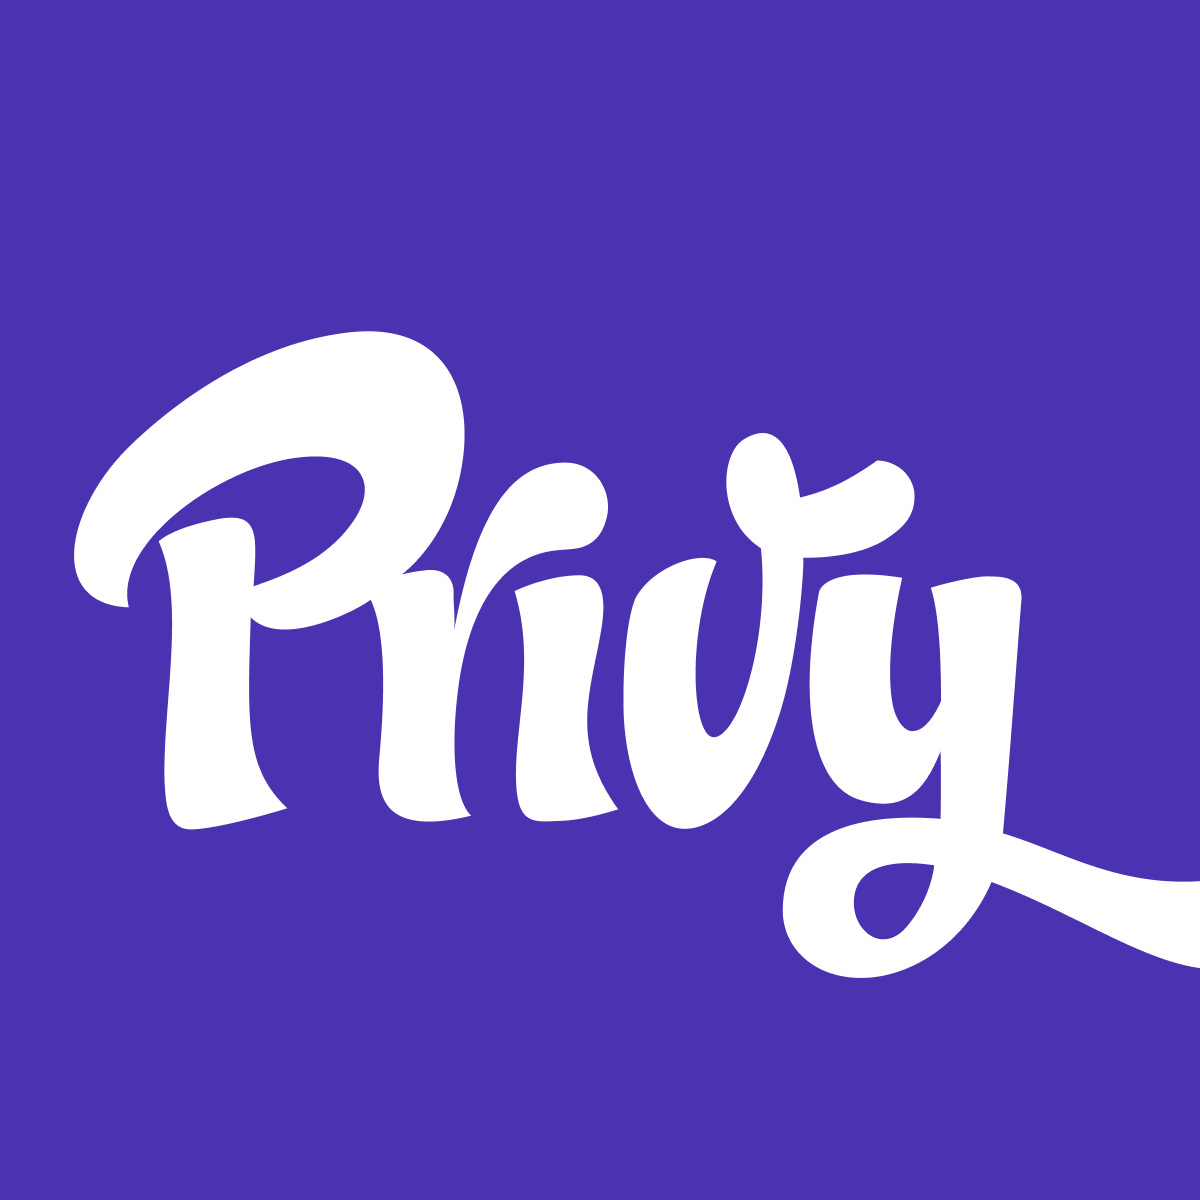 Privy Logo